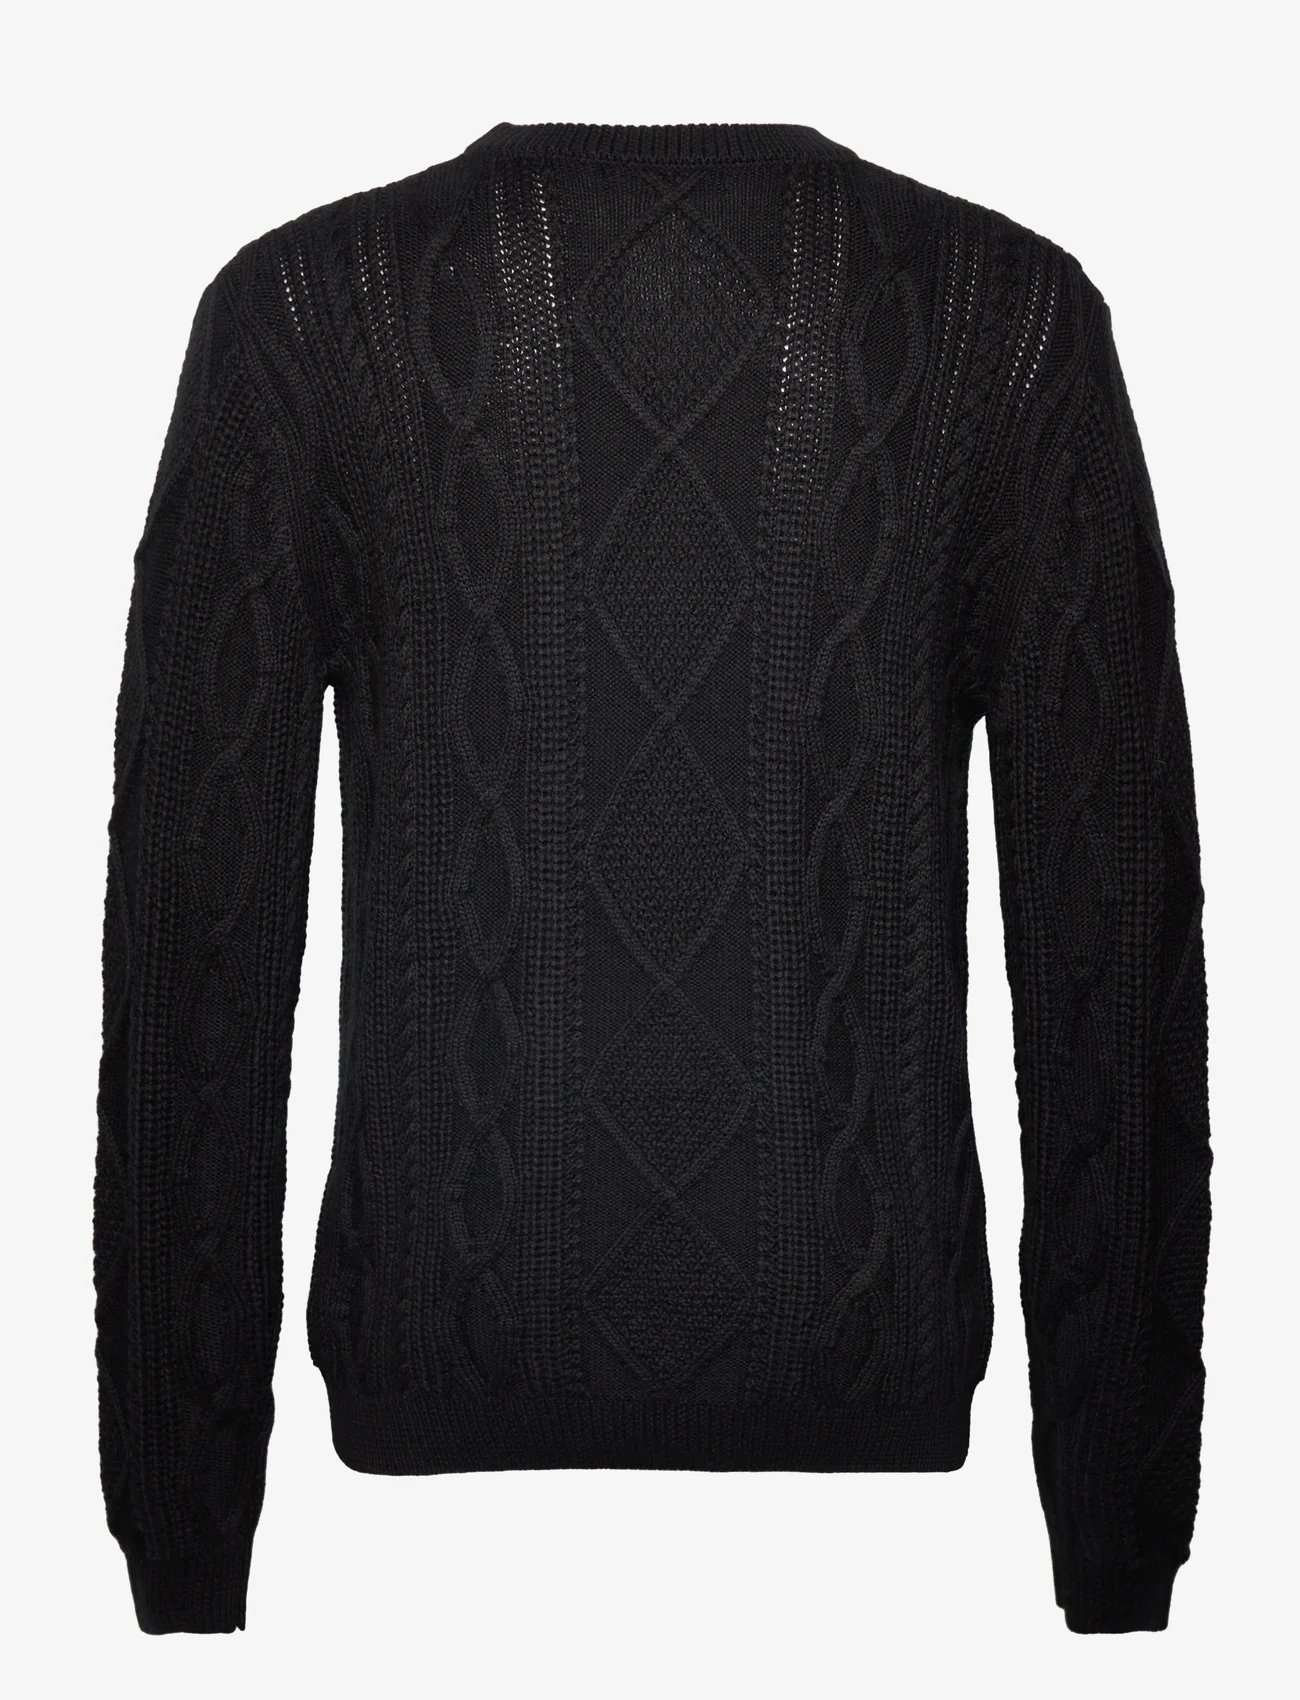 Bruuns Bazaar - RaymondBBCable knit - knitted round necks - black - 1